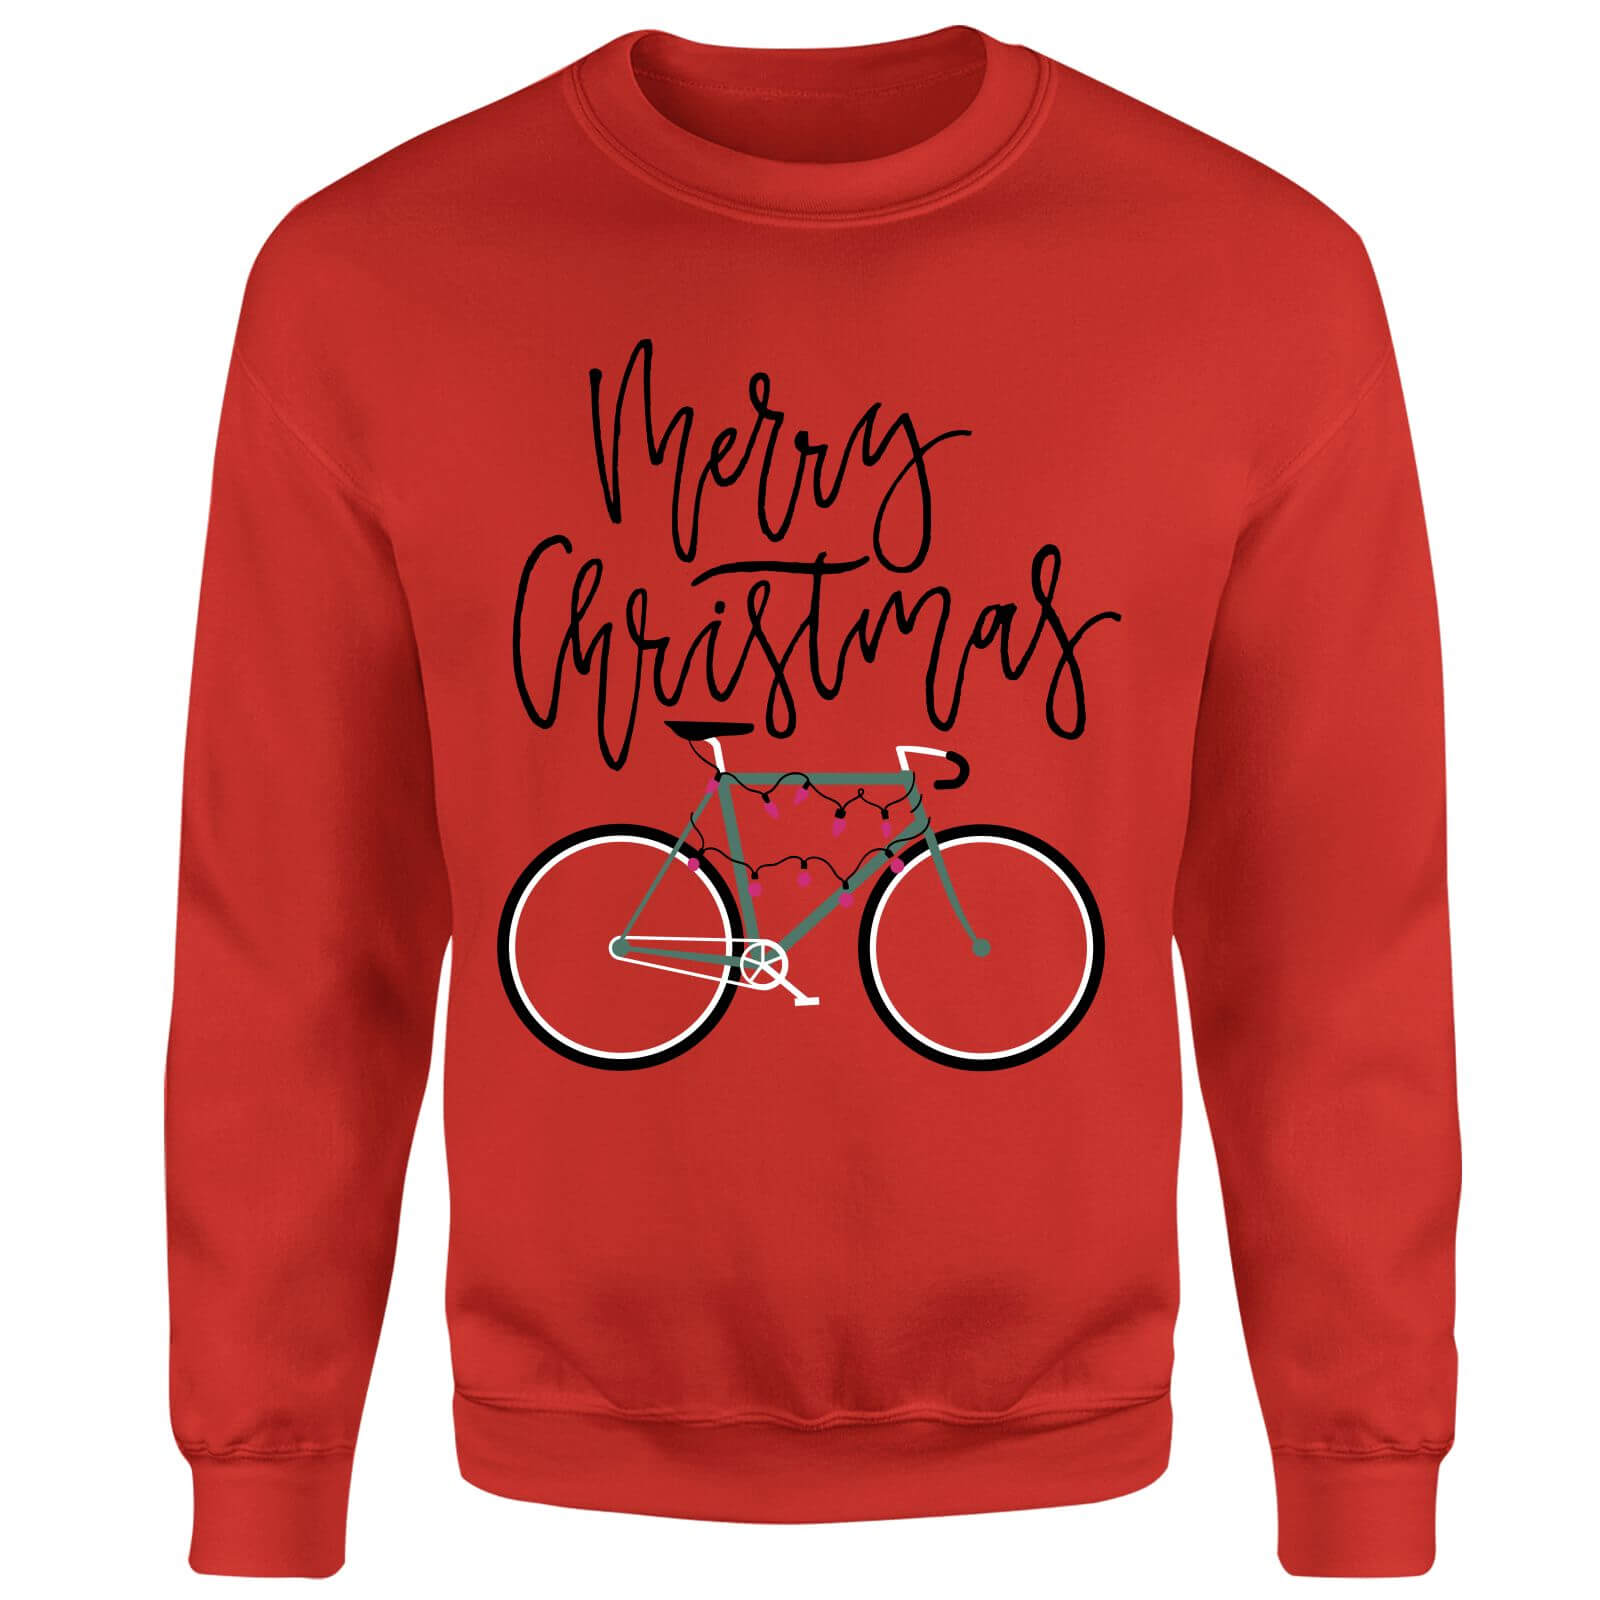 Bike Lights Christmas Sweatshirt - Red - S - Red